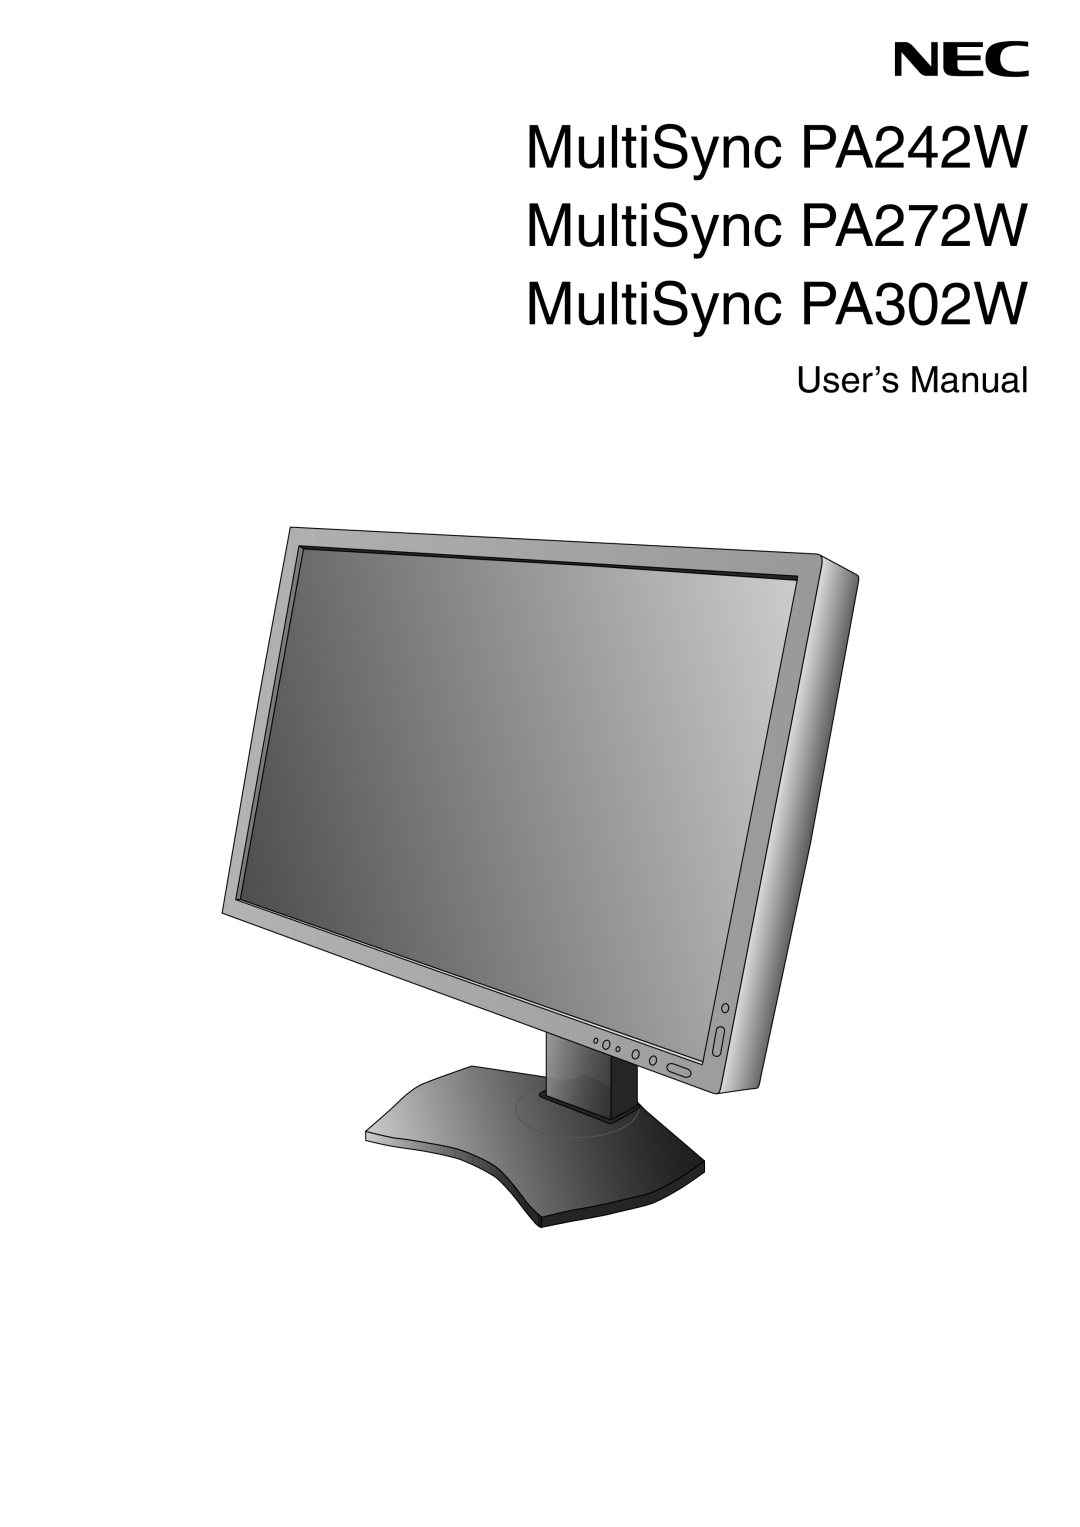 NEC user manual MultiSync PA242W MultiSync PA272W MultiSync PA302W, User’s Manual 